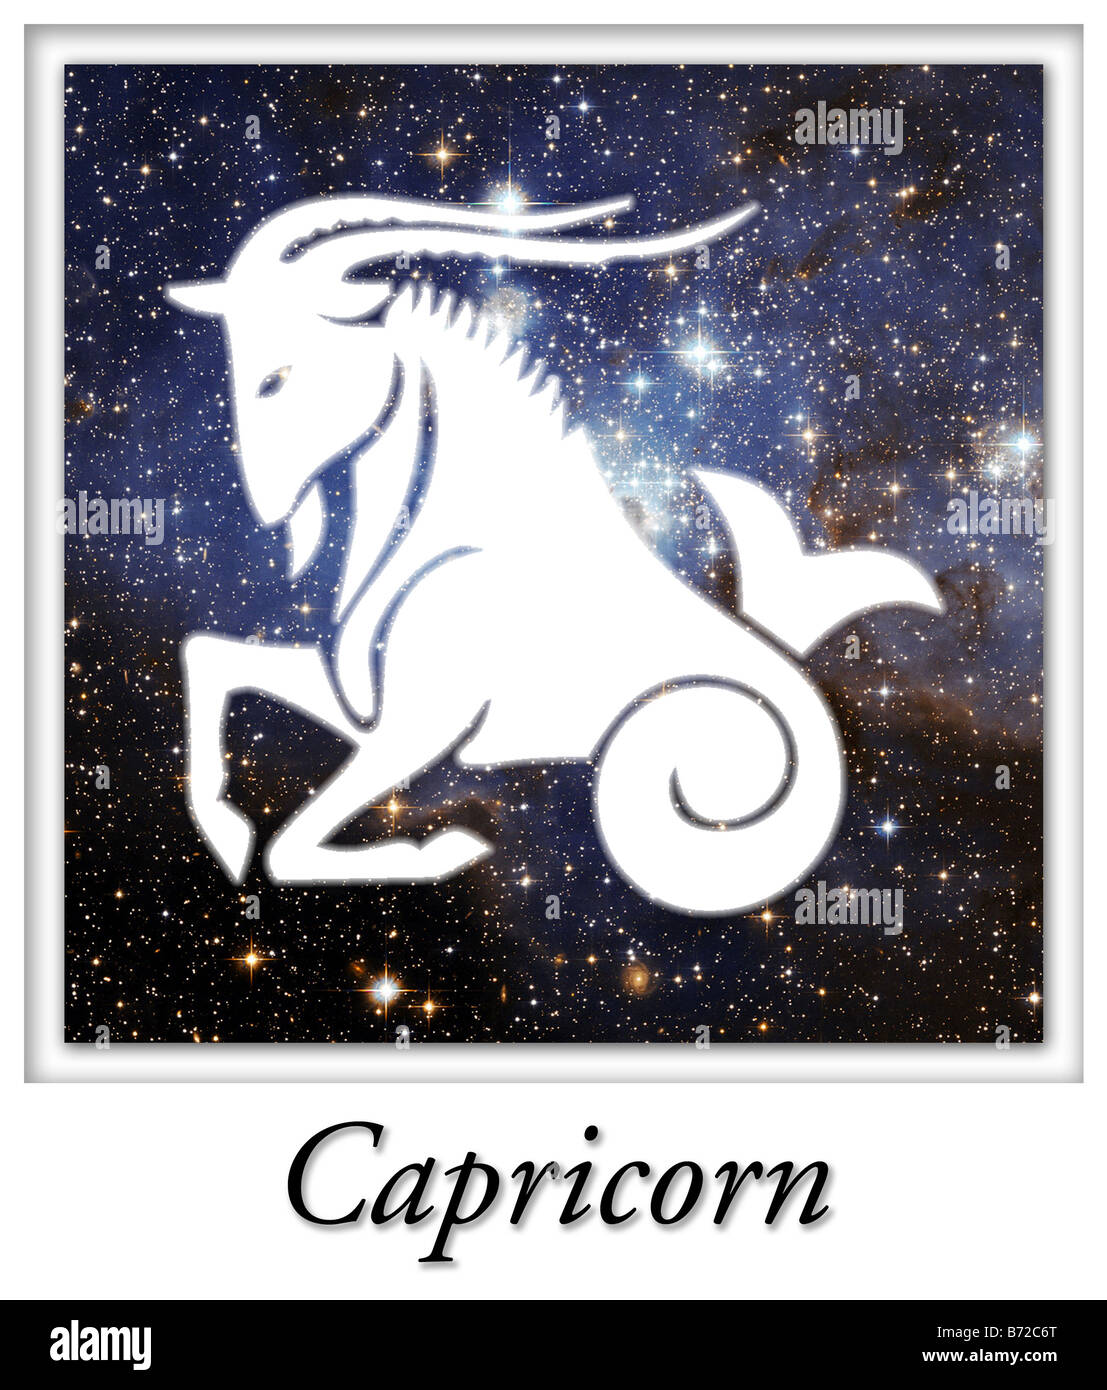 Capricorn Astrological Astrology Horoscope Birth Sign Stock Photo